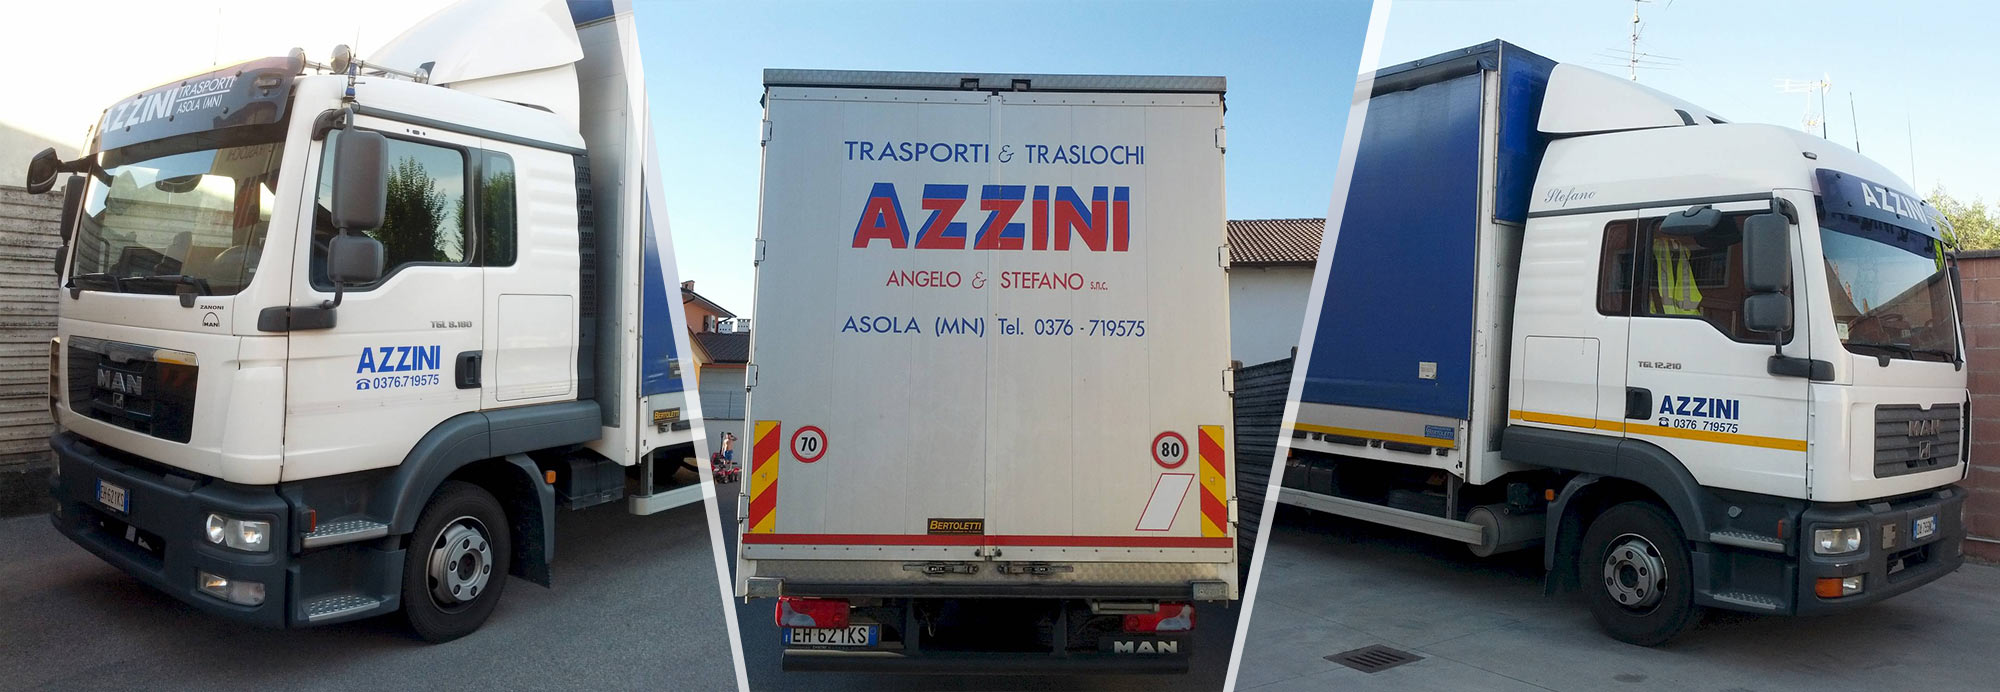 Autotrasporti Azzini Asola - Mantova (Italia)